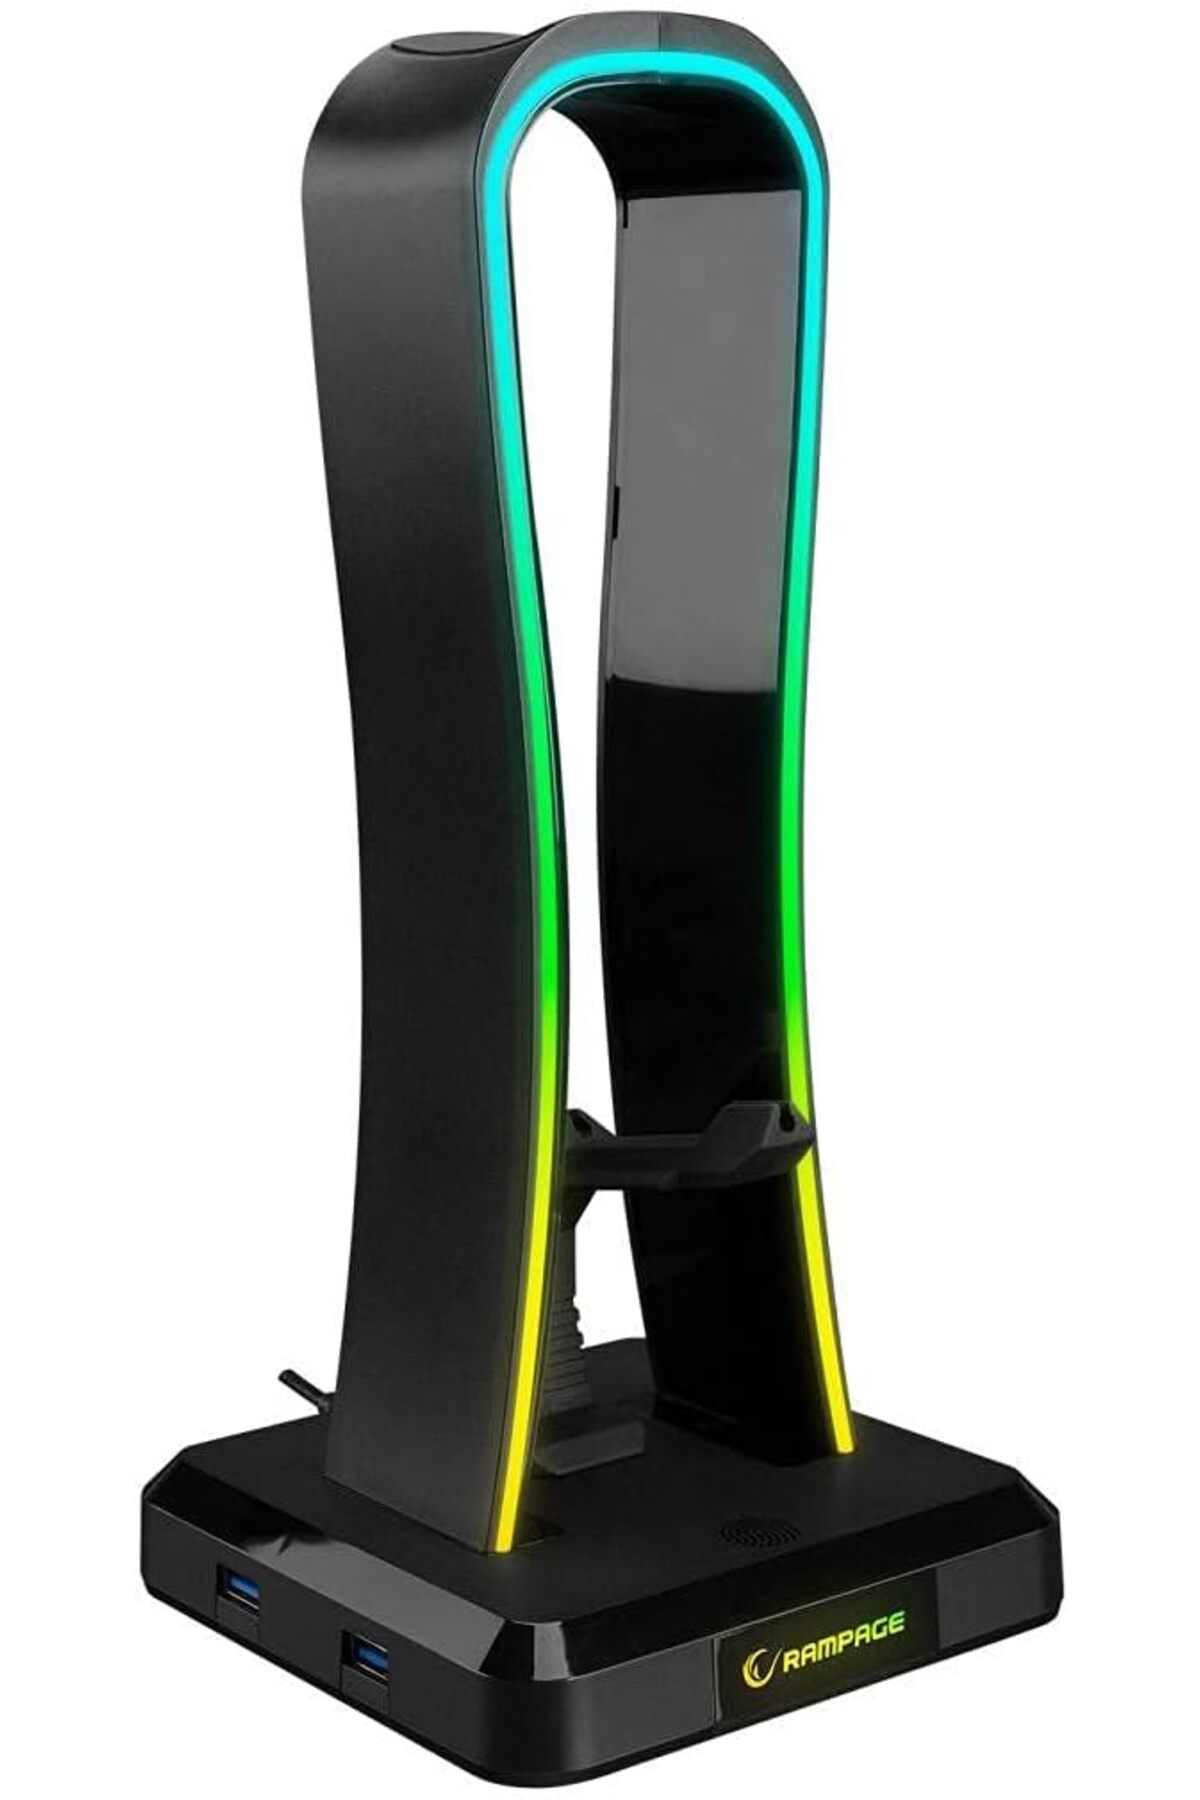 Store RM-H77 X- Kulaklık için Stand RGB Işıklı 4xUsb Port Kulaklık Stand